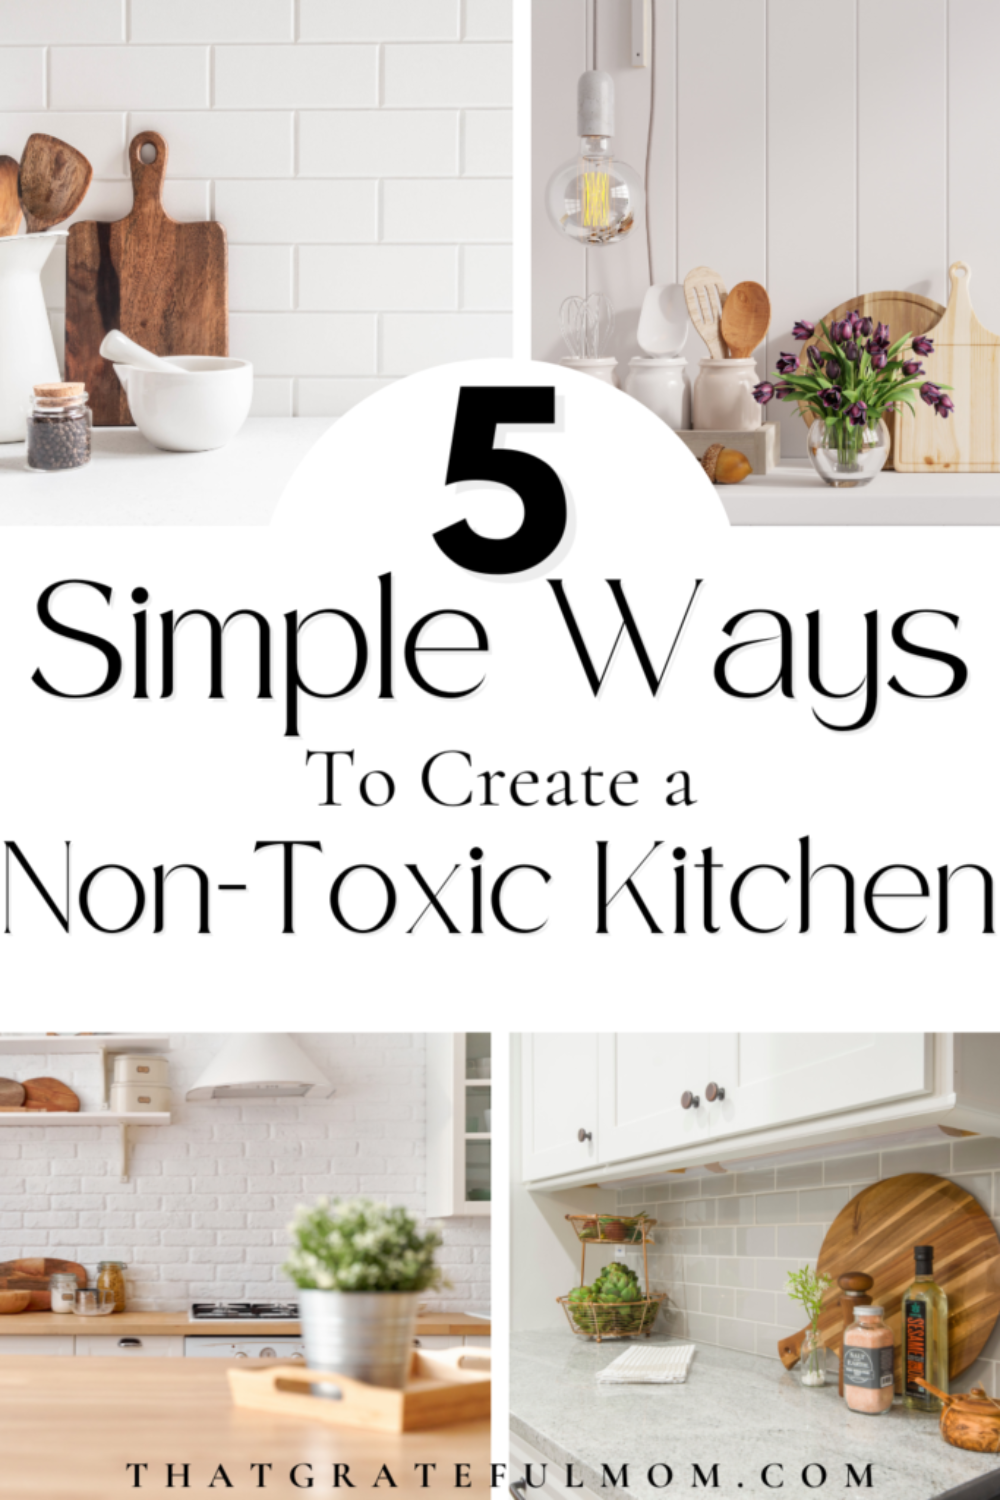 Simple ways to create a non-toxic kitchen